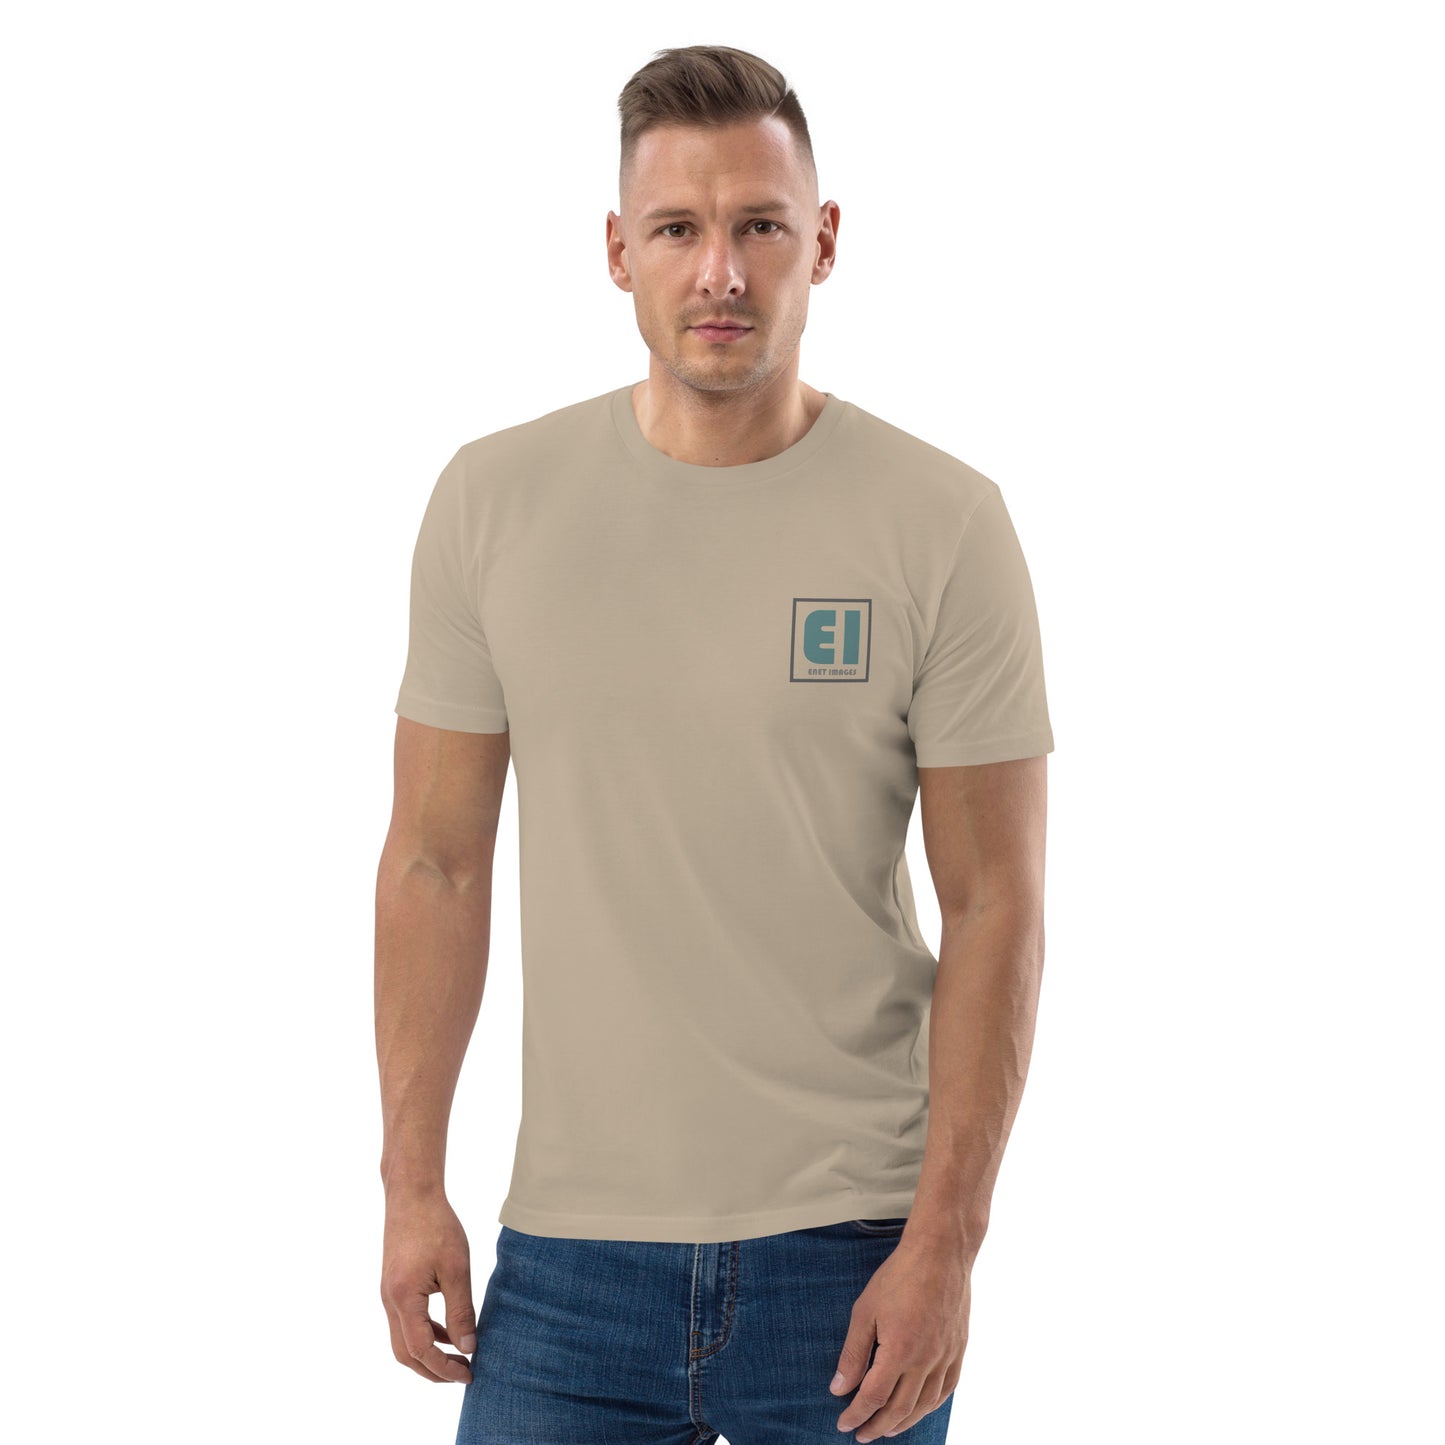 Unisex organic cotton t-shirt/Enet-Images-EI